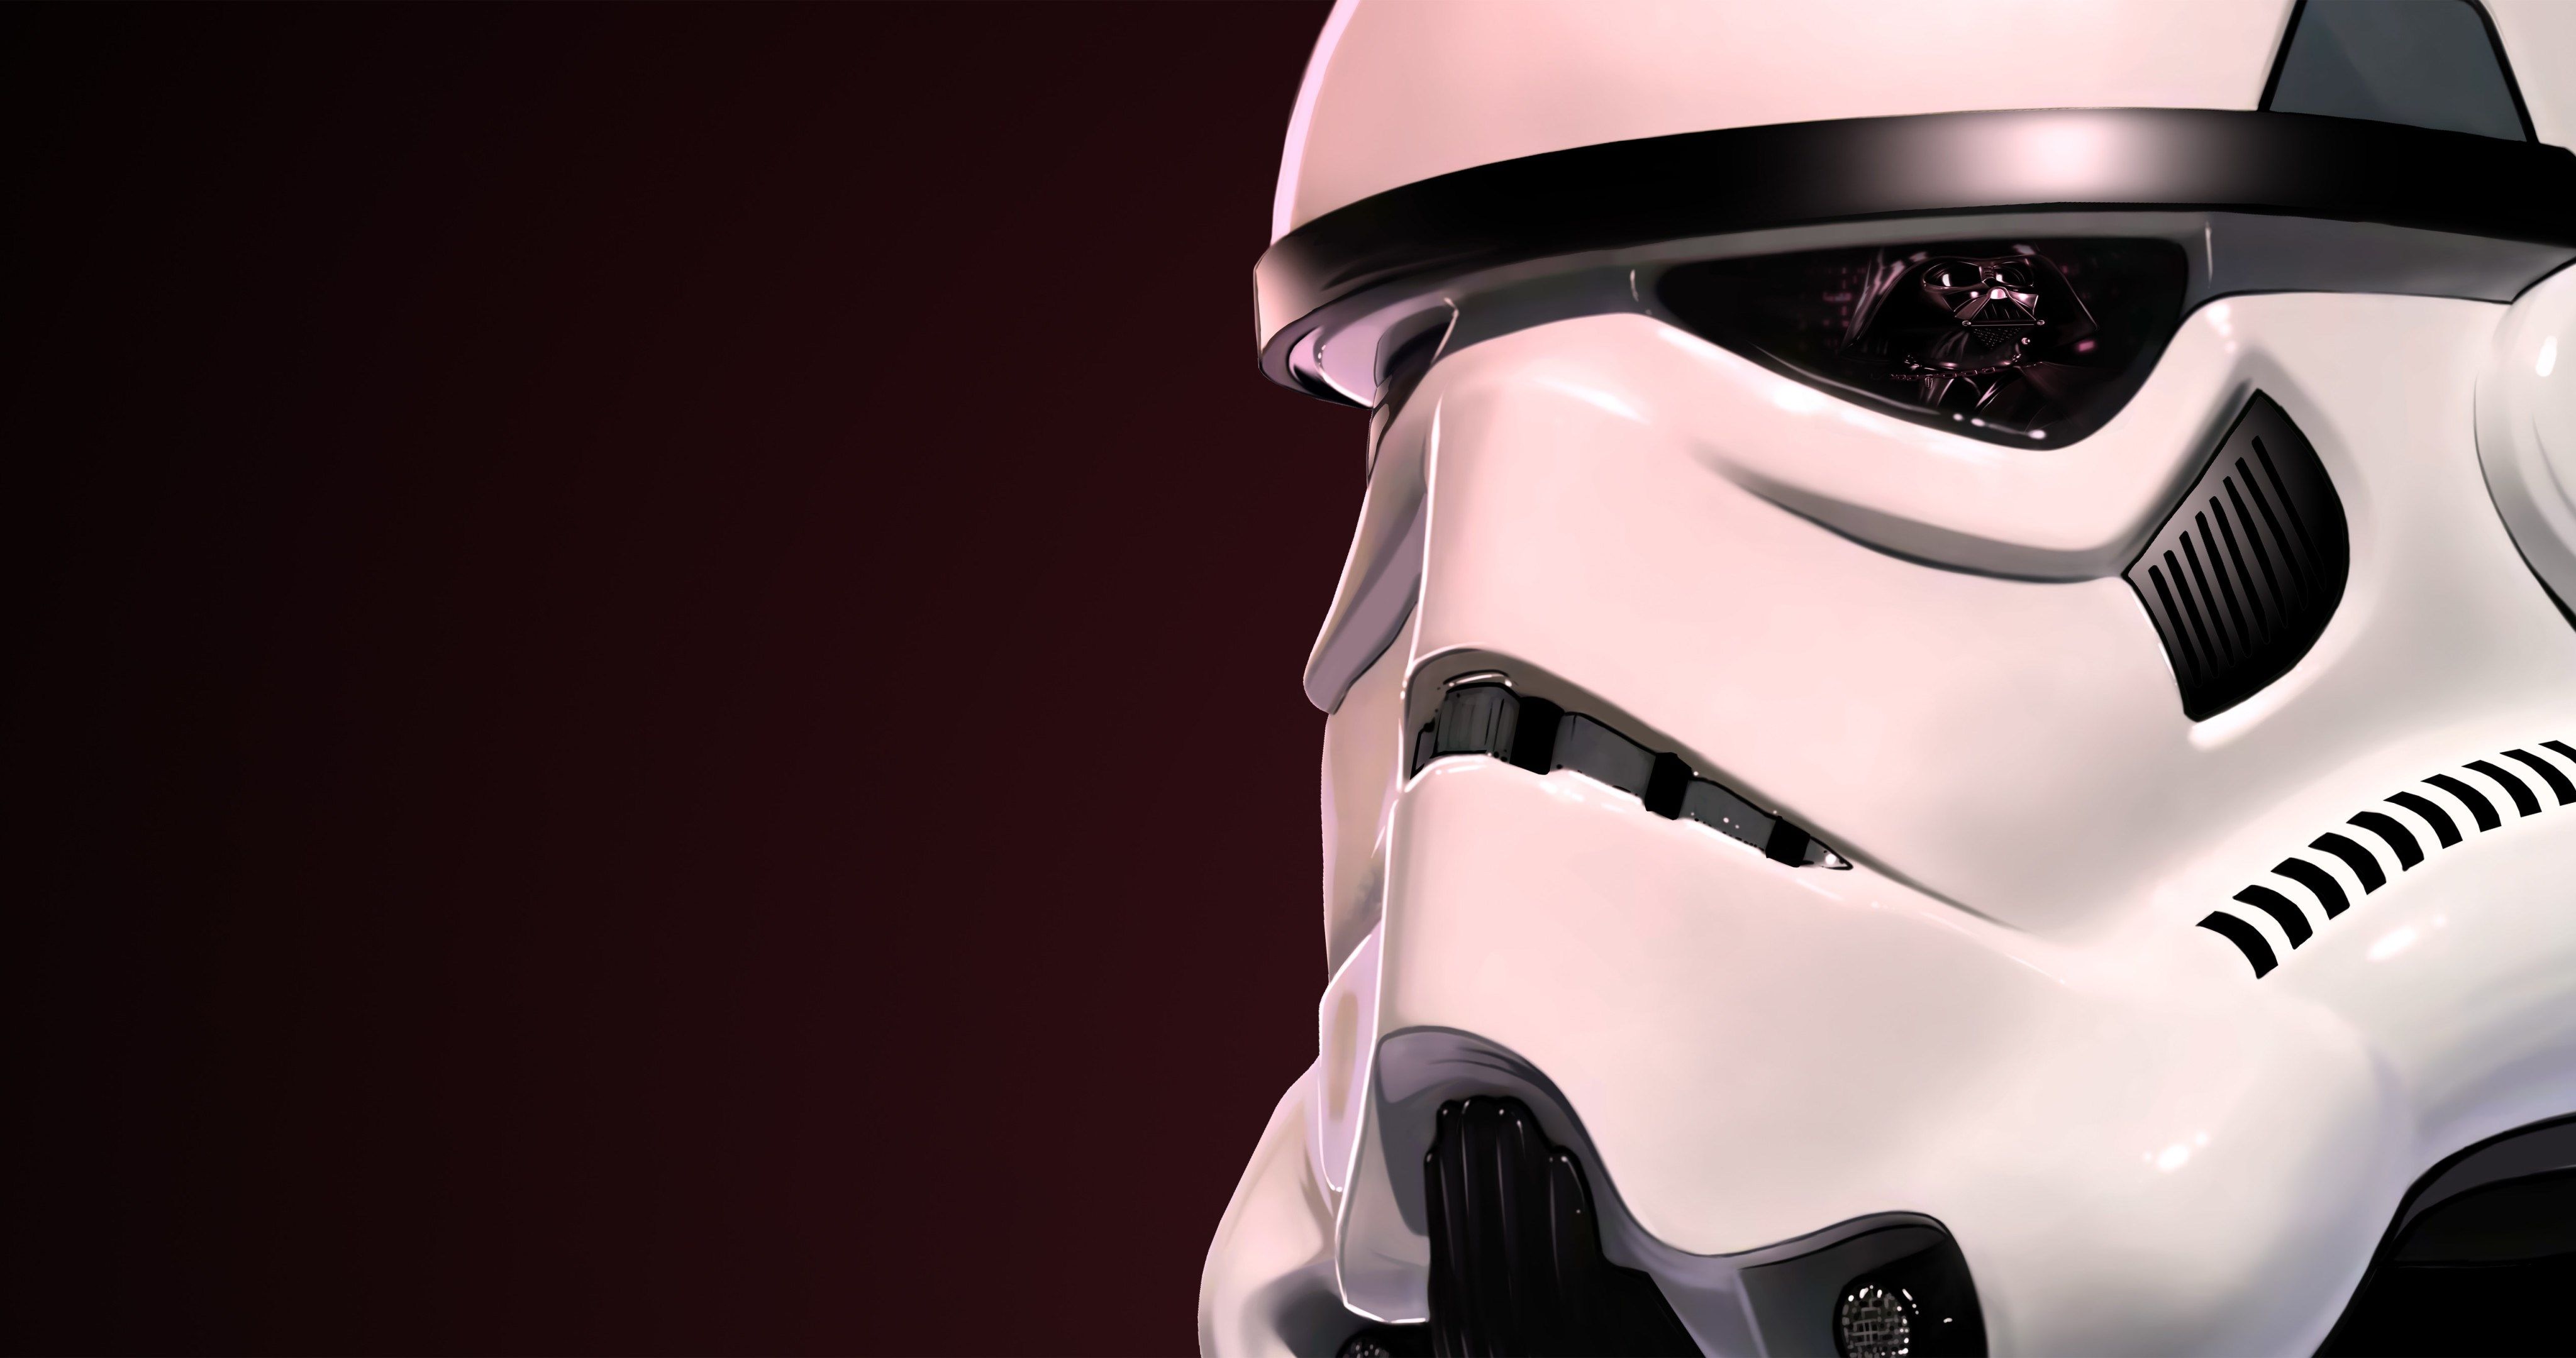 storm trooper helmet 4k ultra HD wallpaper. Star wars wallpaper, Stormtrooper, Storm trooper